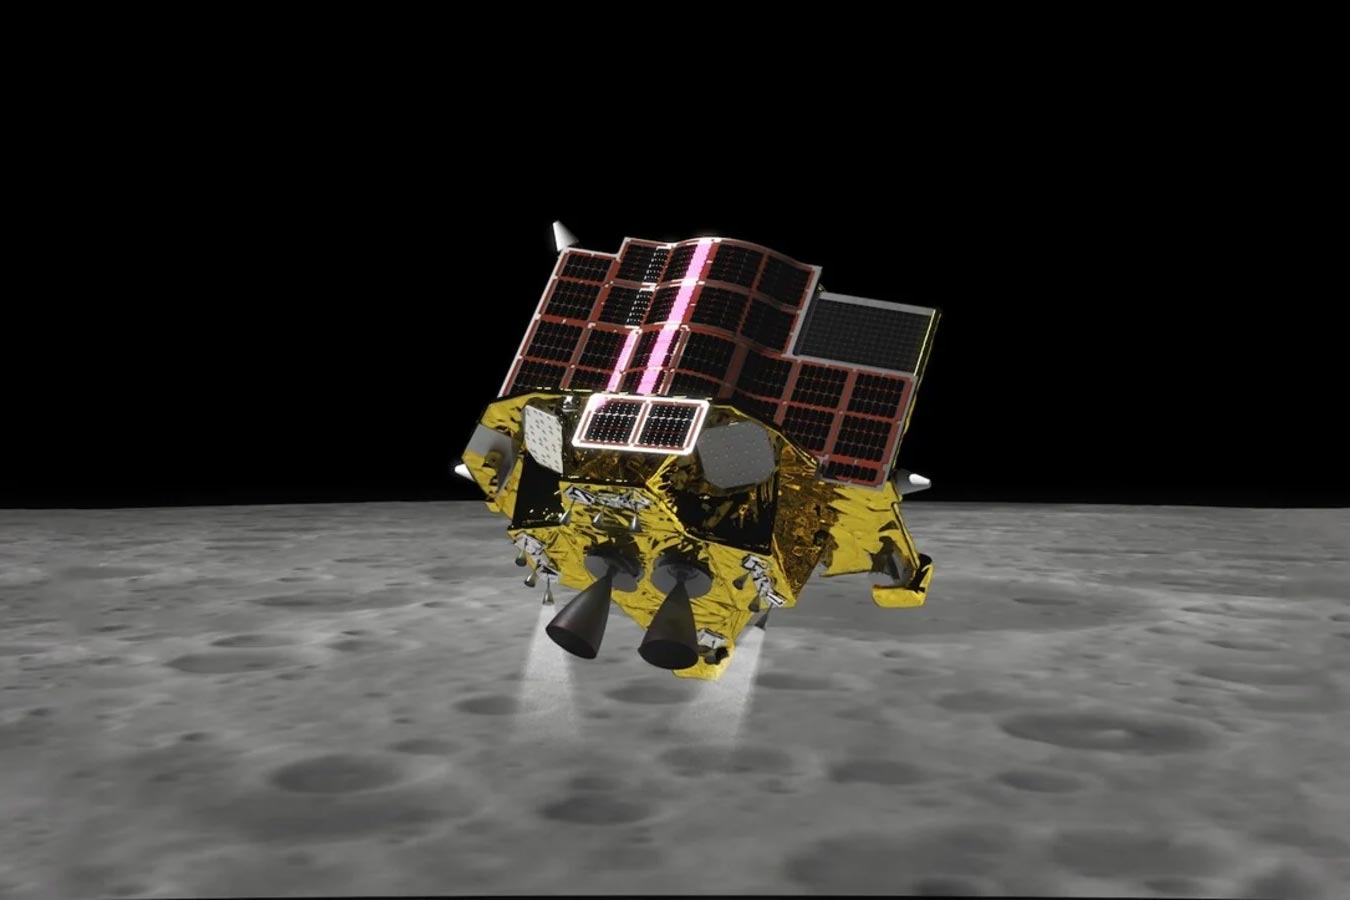 japan moon lander slim 662c0e4838477a35277fba9a